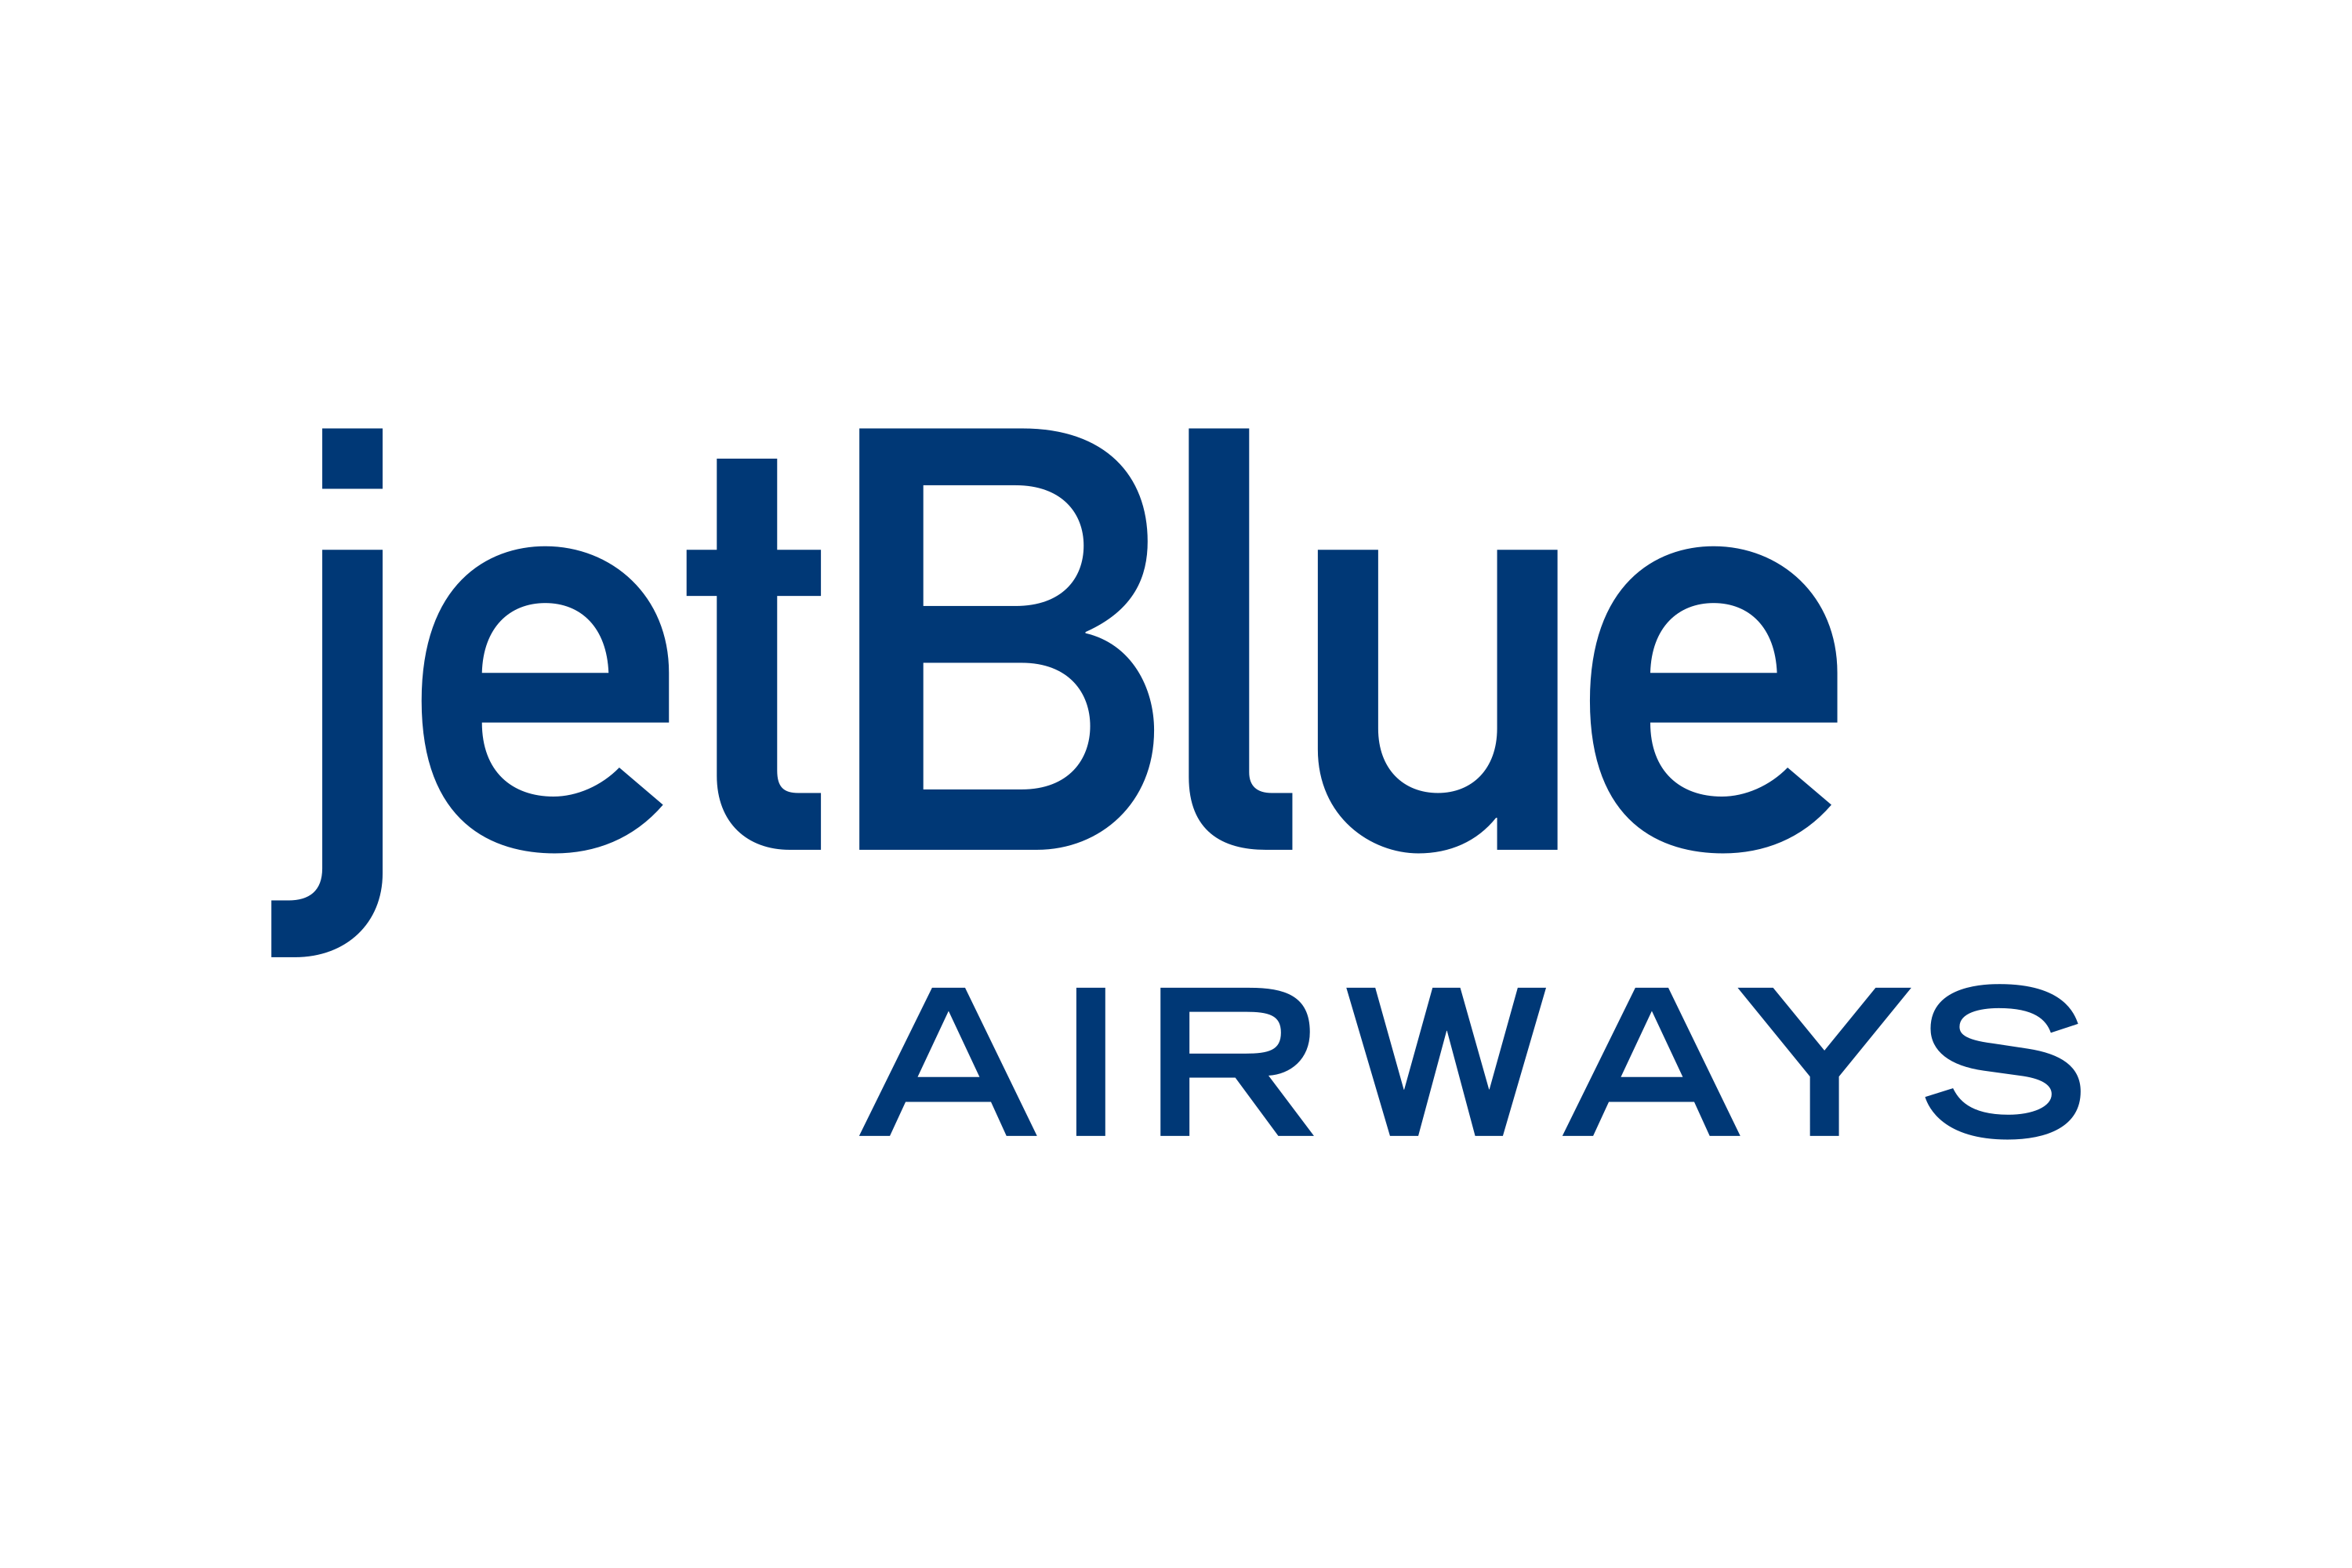 Download JetBlue Airways Logo in SVG Vector or PNG File Format - Logo.wine